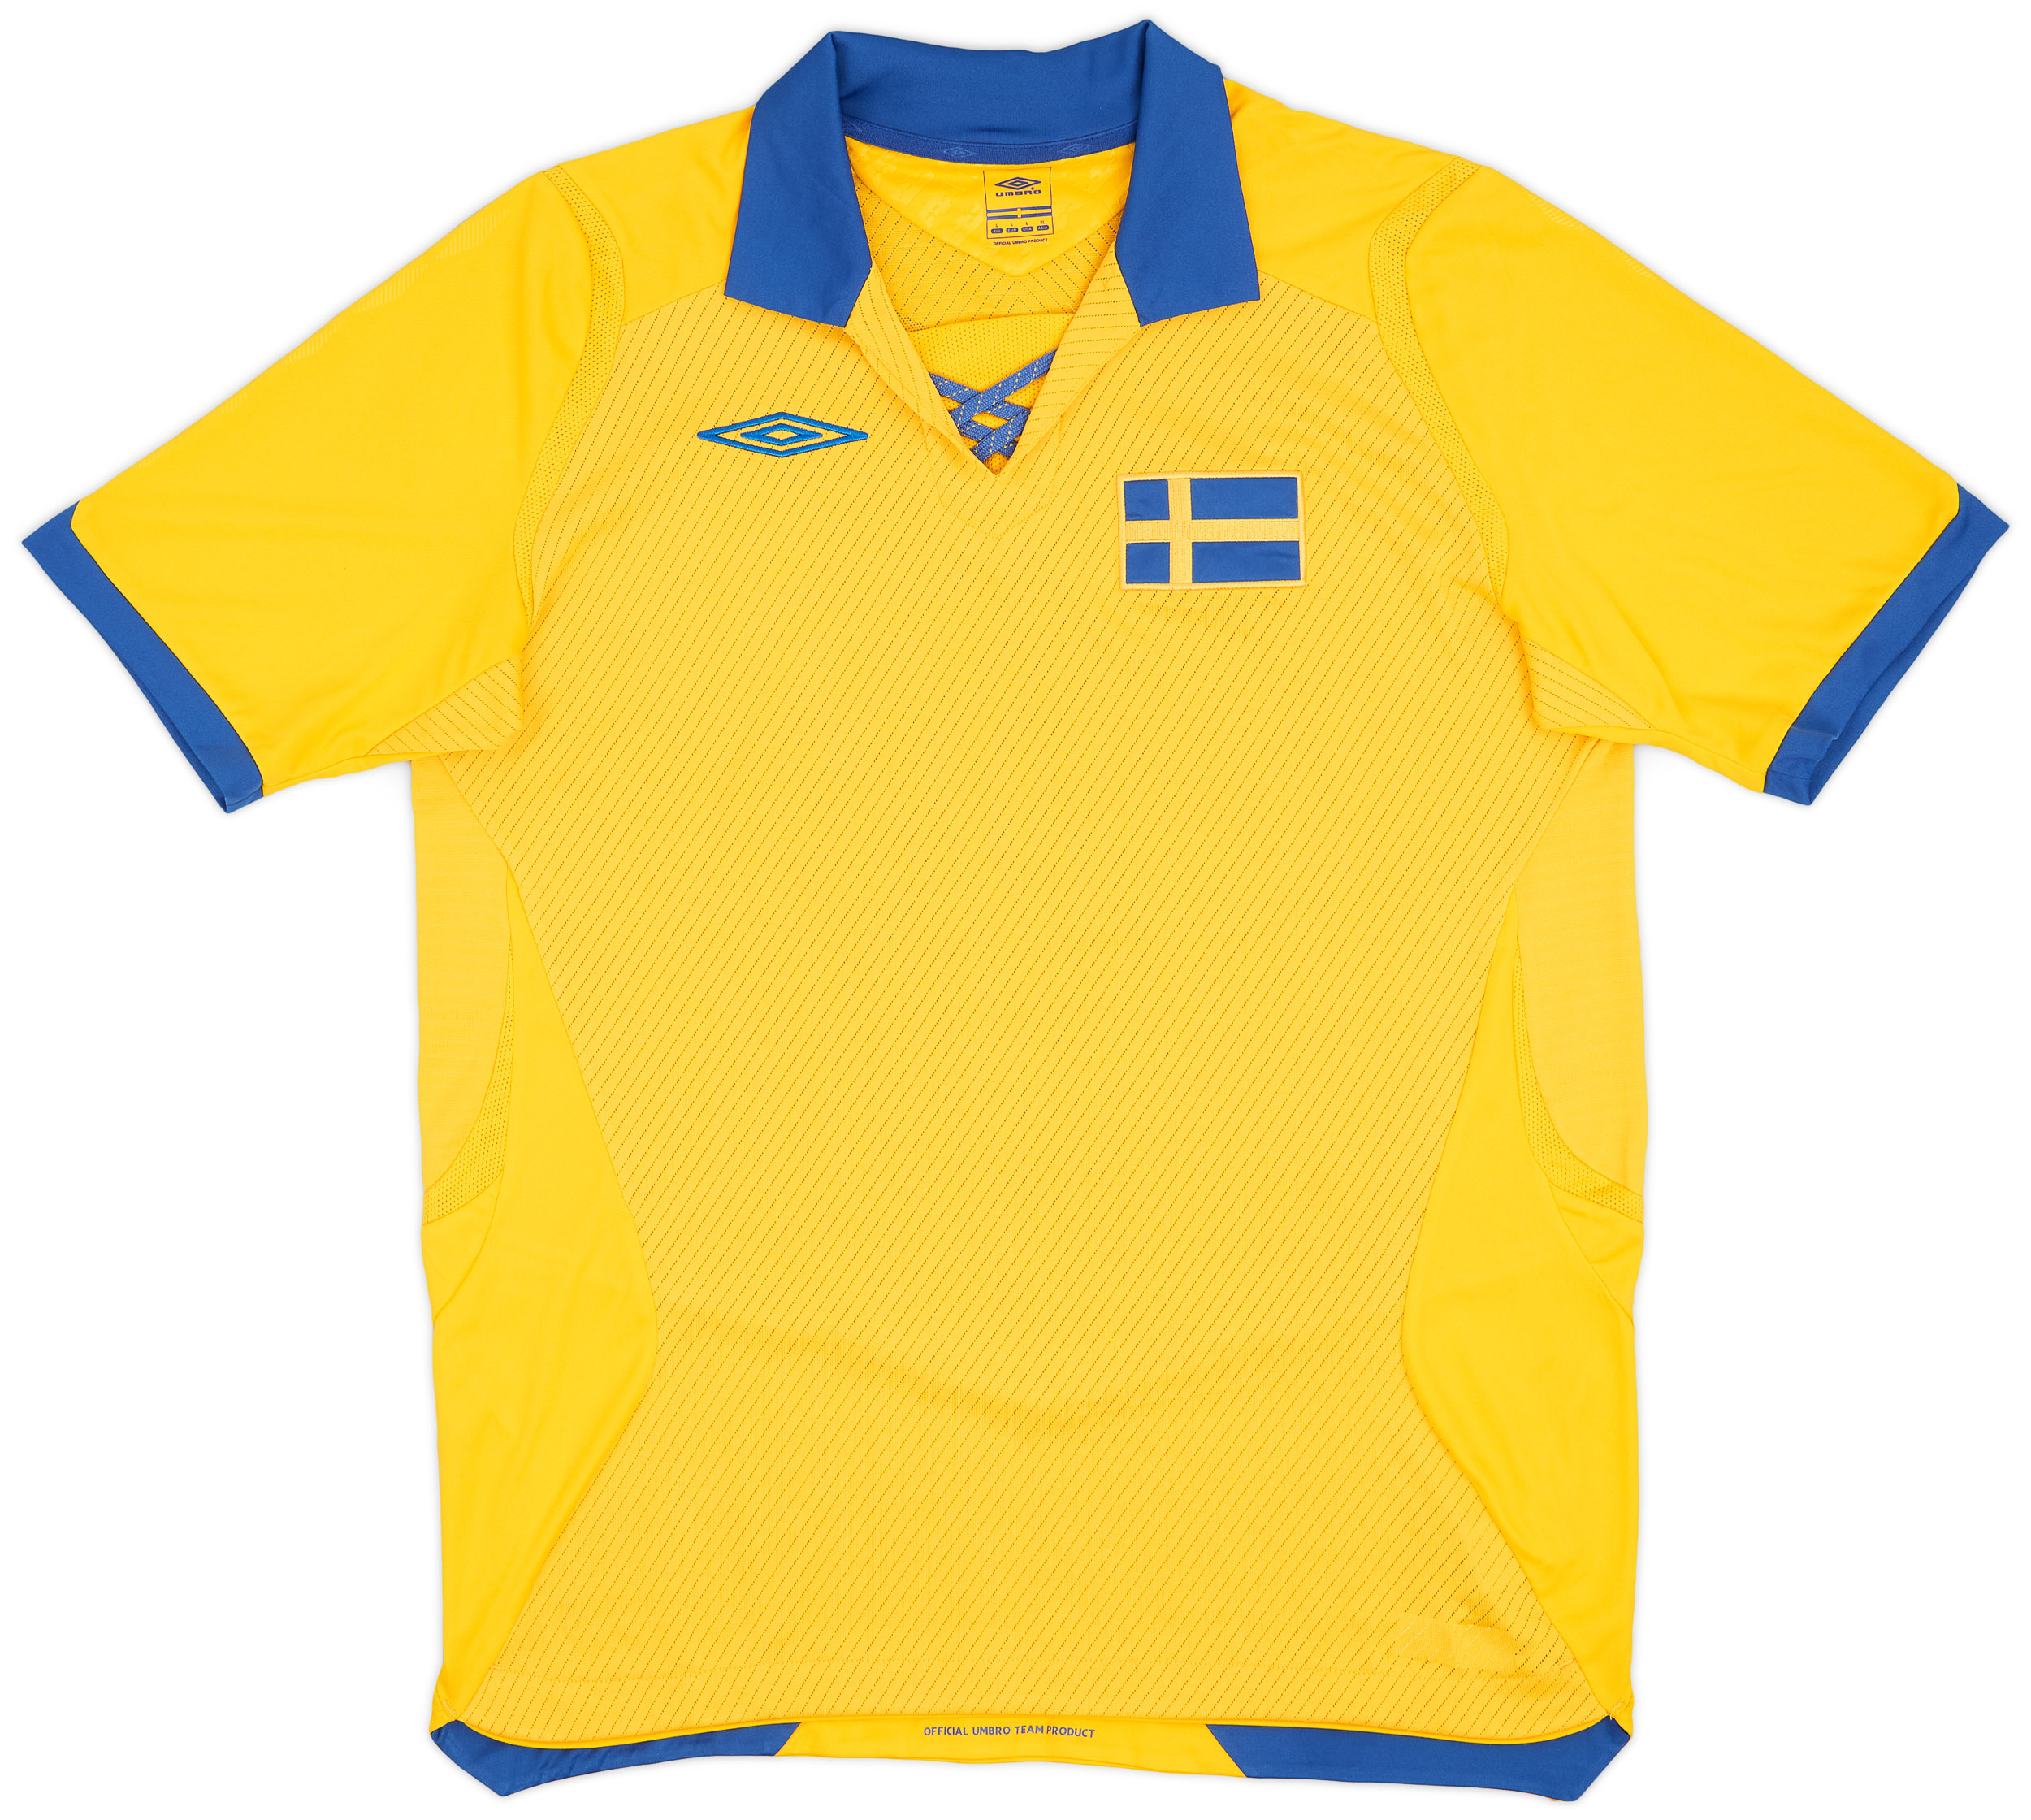 2008 Sweden Special Anniversary Shirt - 9/10 - ()